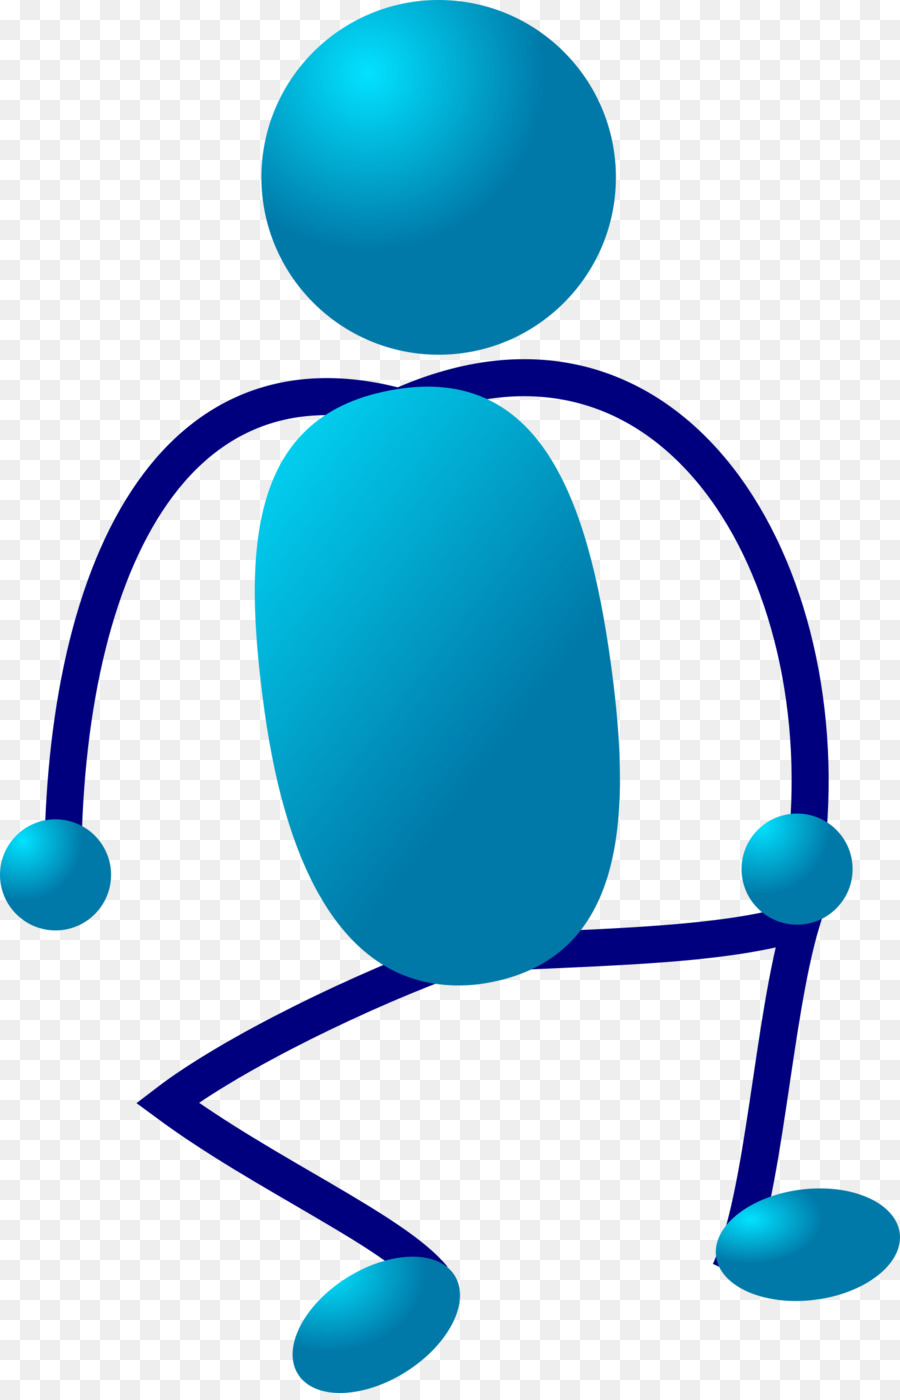 blue clipart stick figure